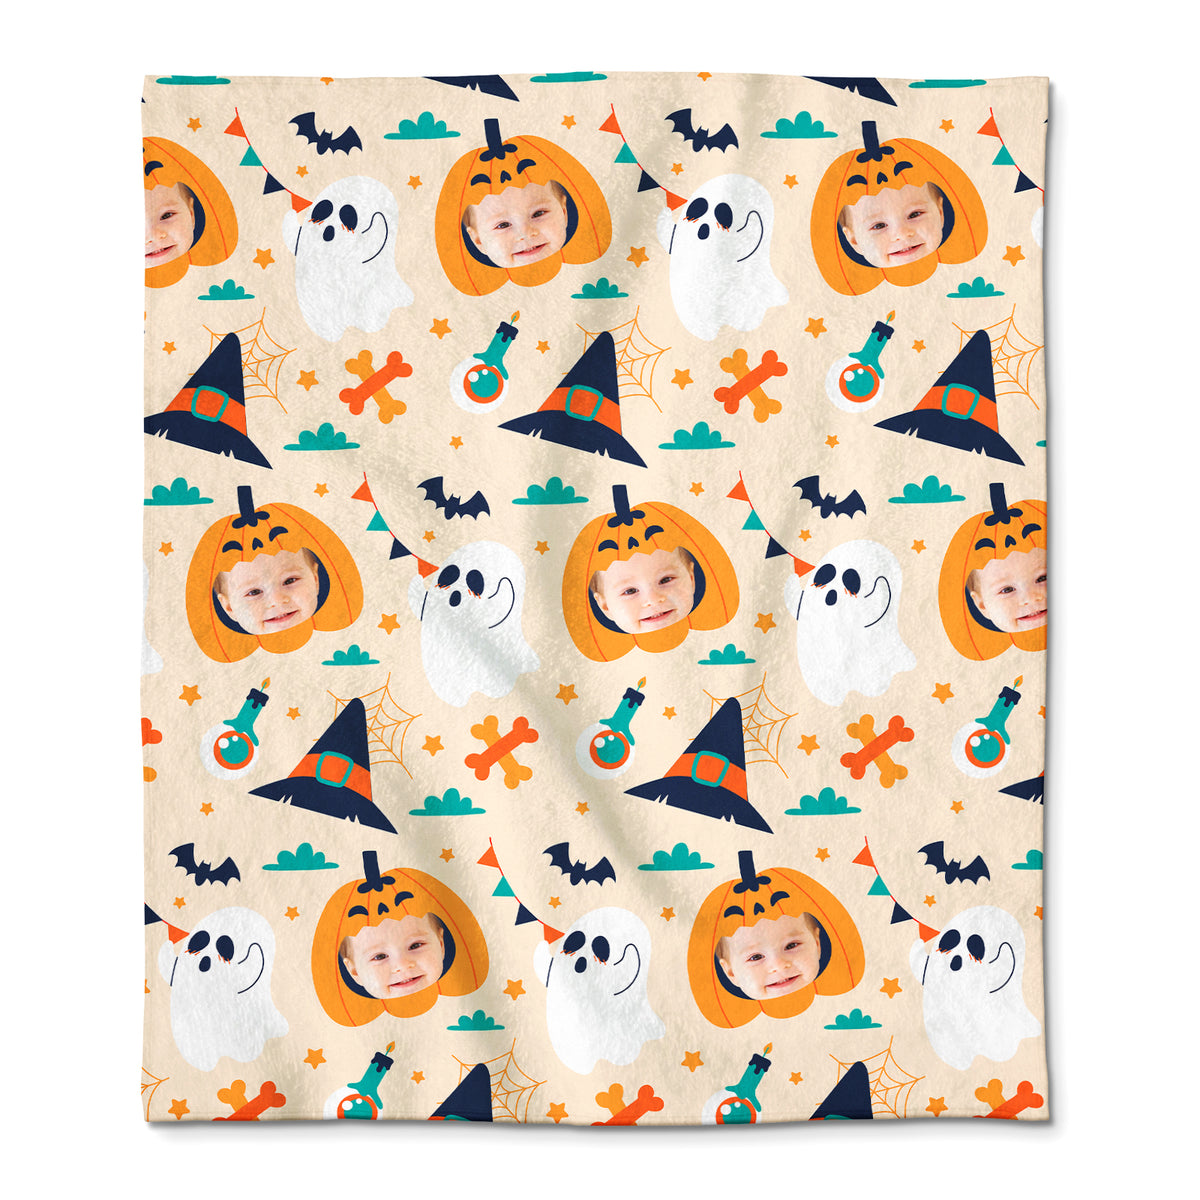 Customize Your Hauntingly Fun Halloween Blanket